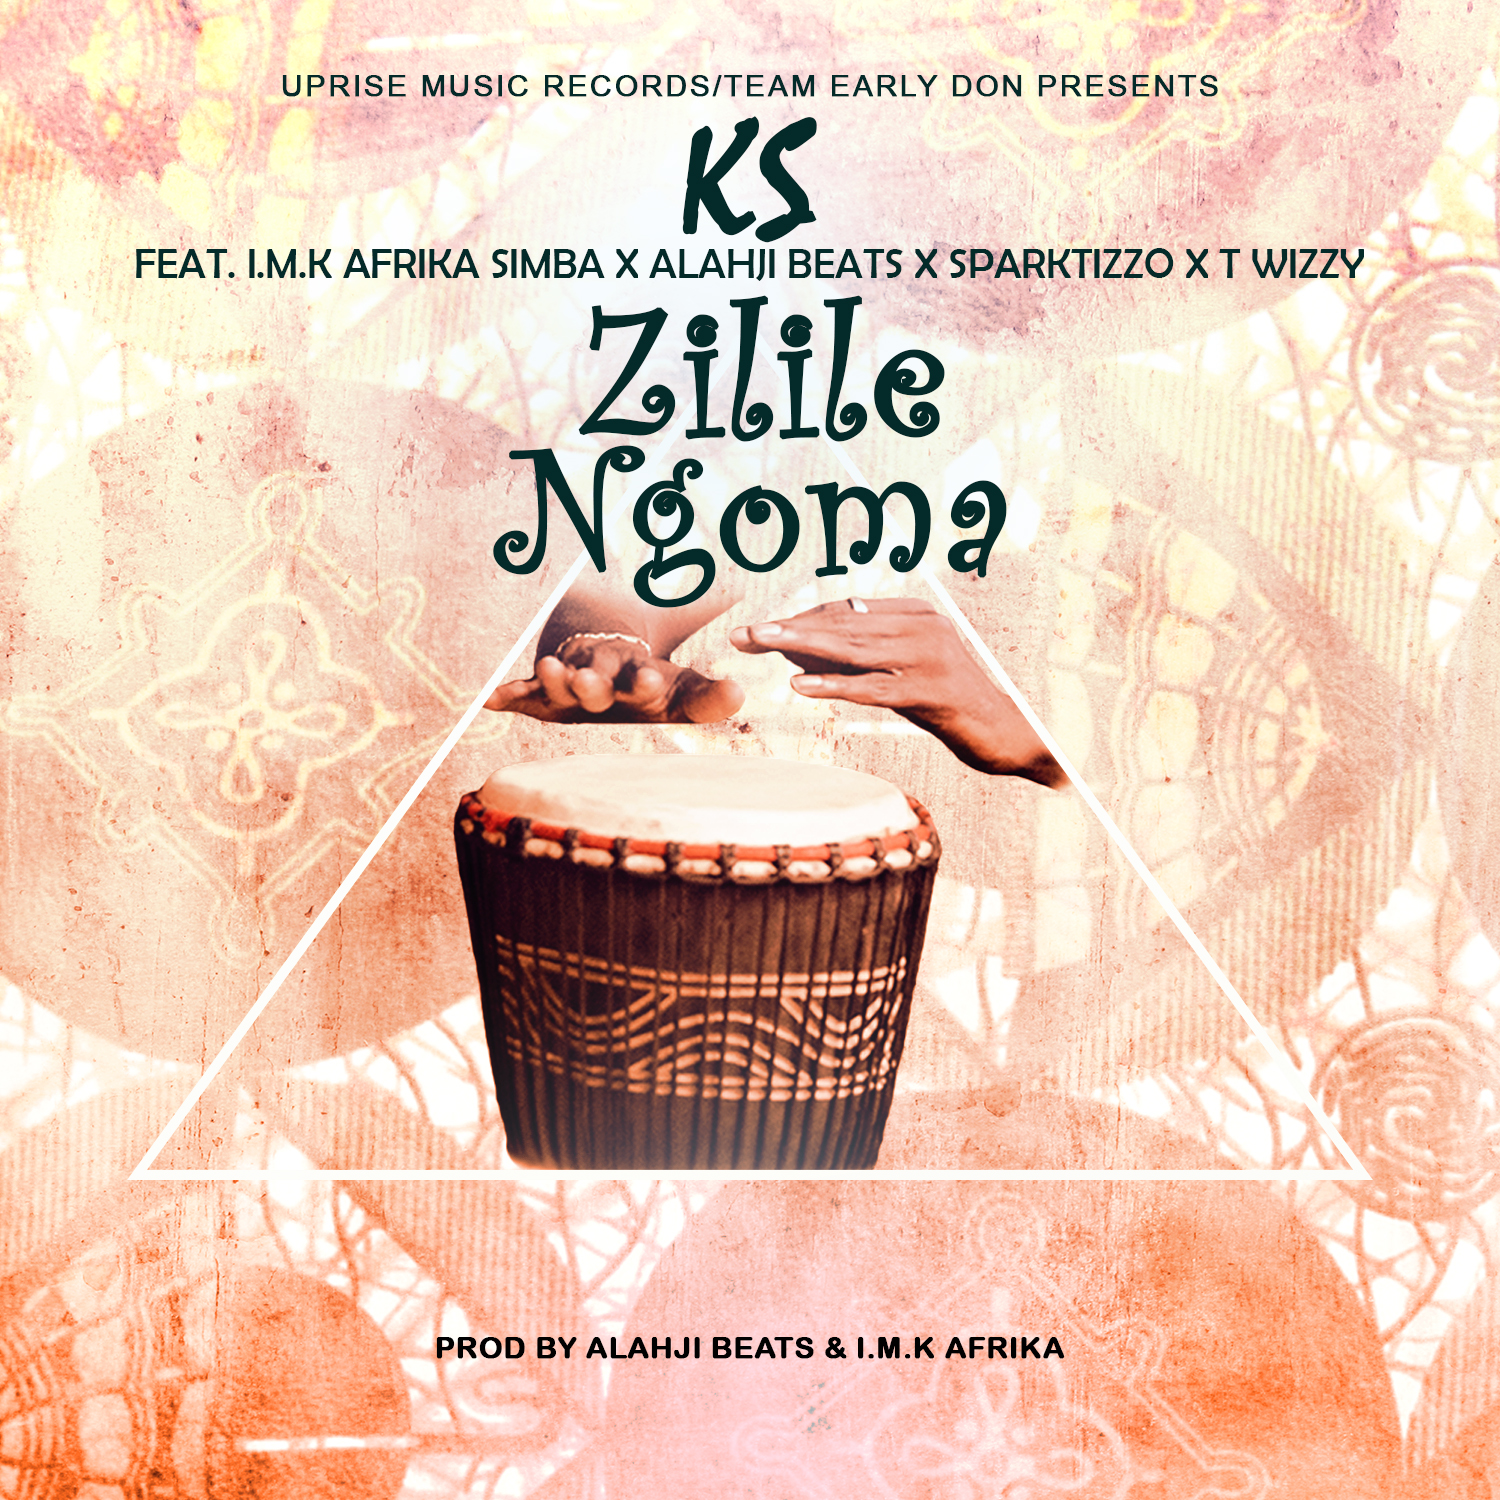 KS-ZILILE NGOMA ft Alahji Beats, Imk Afrika Simba,Sparktizzo, T wizzy (Prod.By Afrika & Alahji beats)